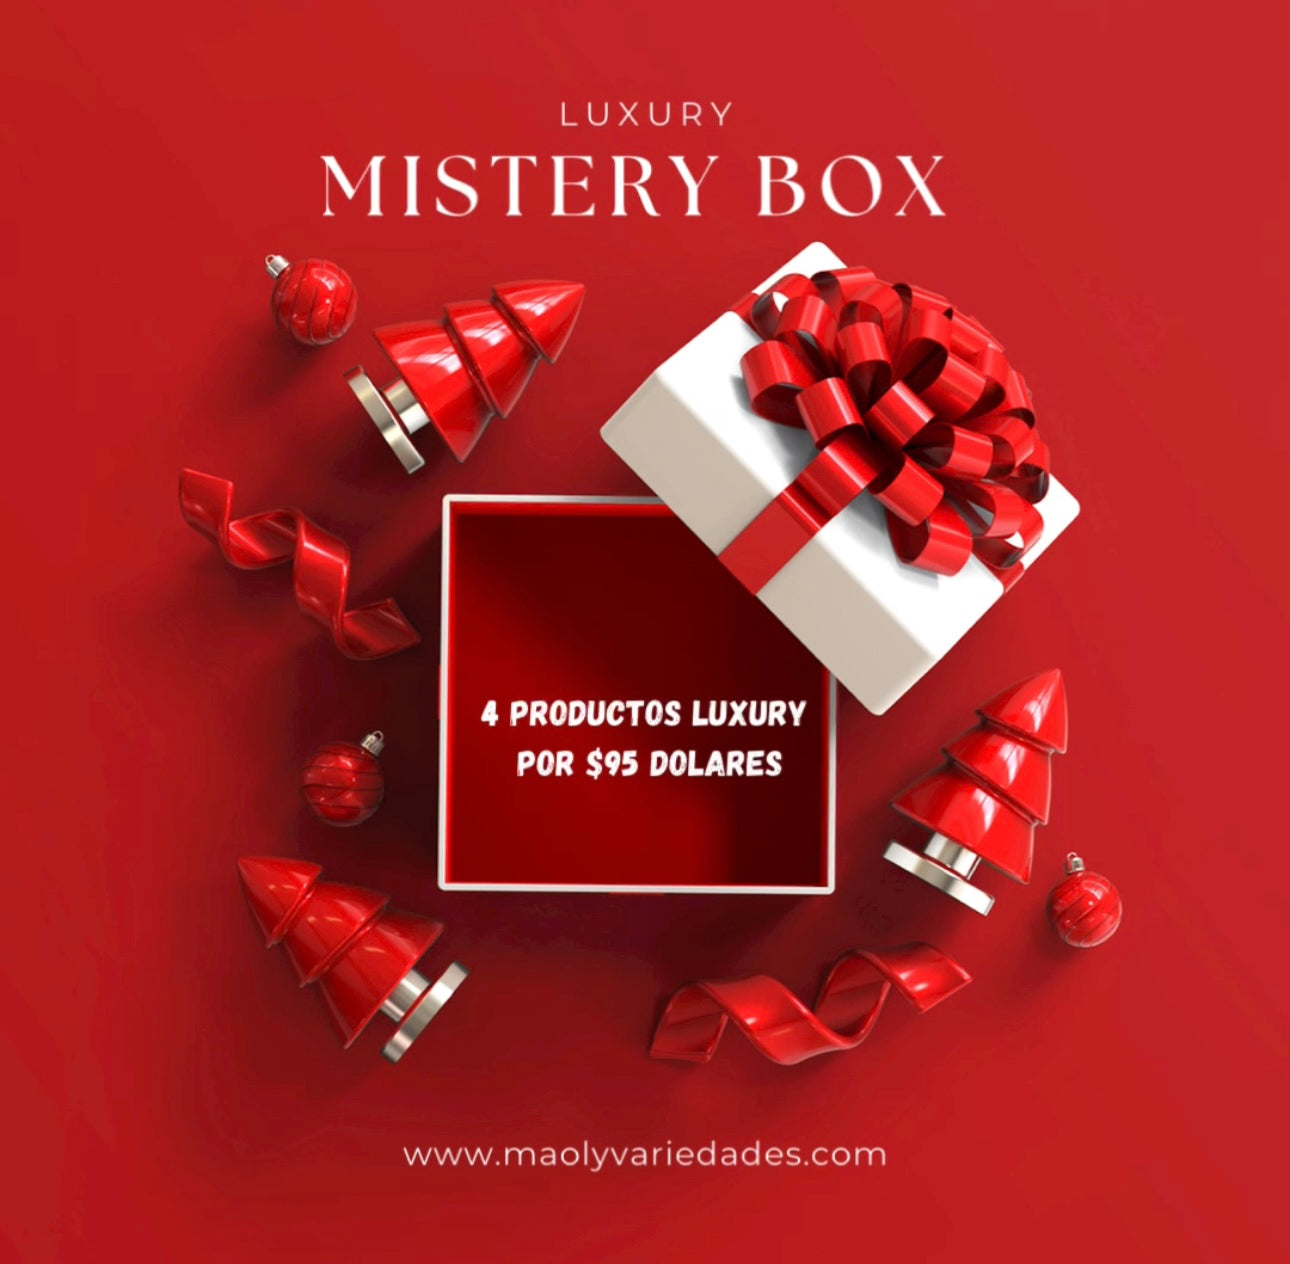 Mixtery box